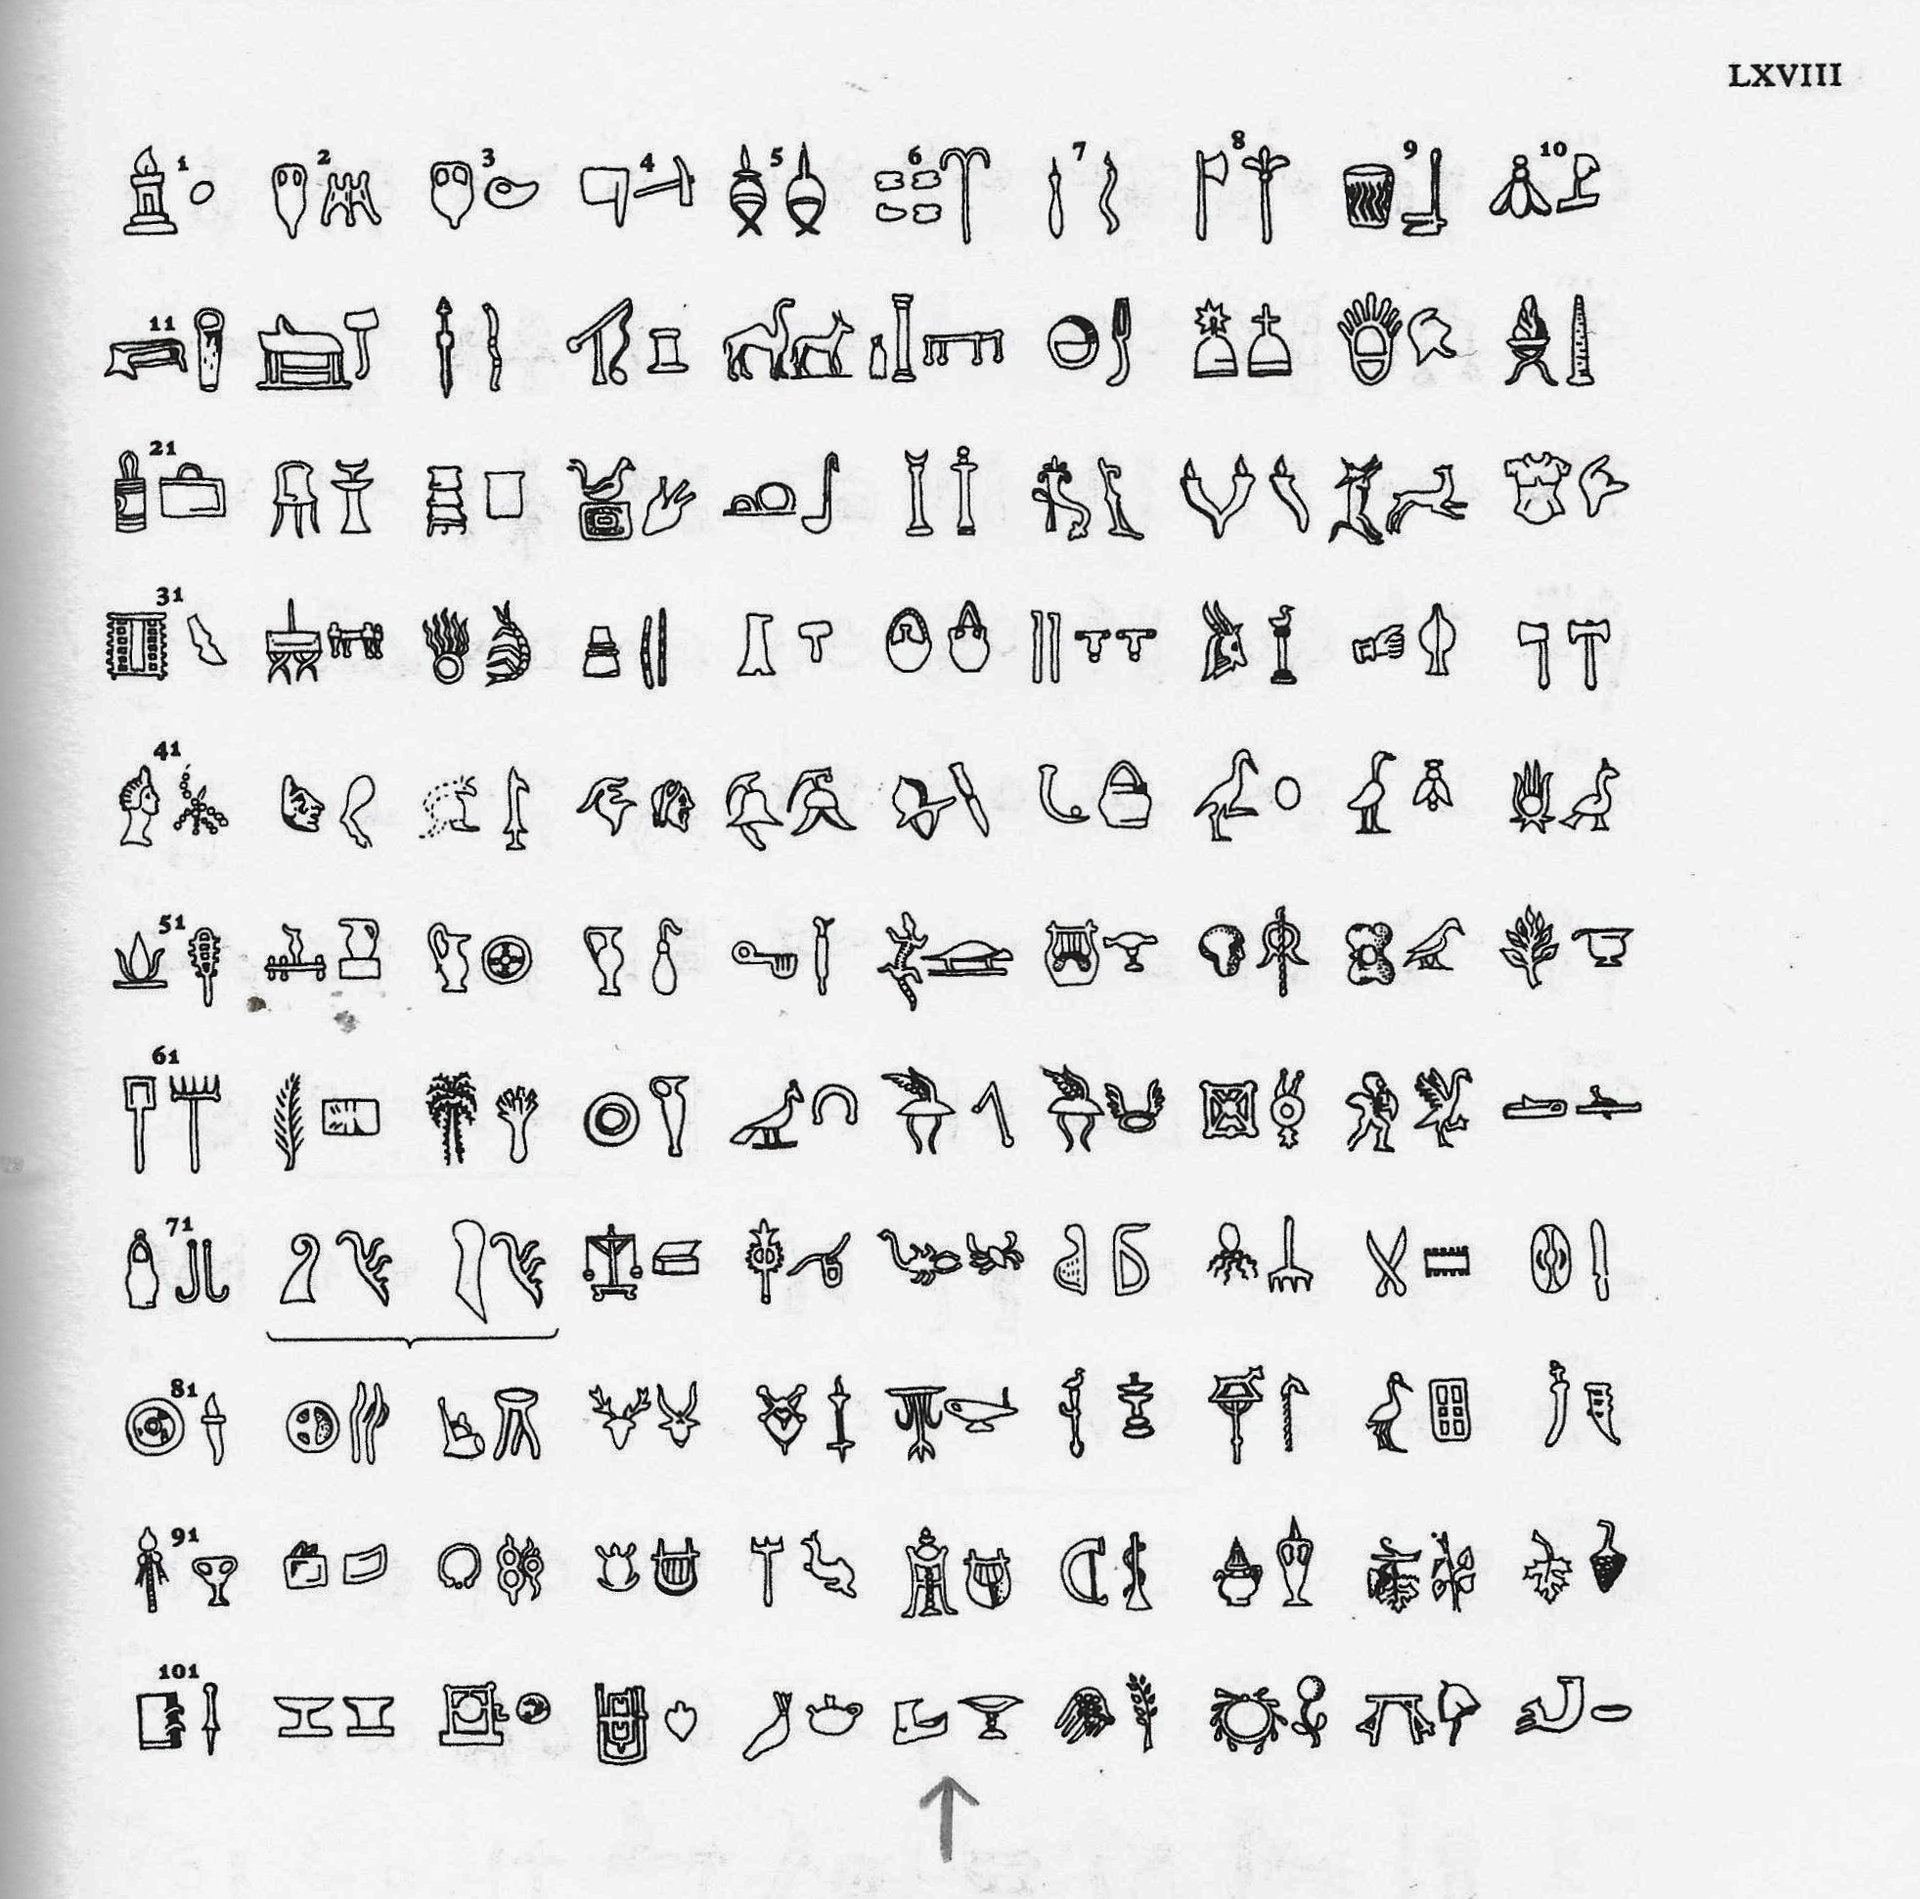 Plate LXVIII Crawford Vol. II (Roscius Fabati control-symbols), see No. 106.jpg